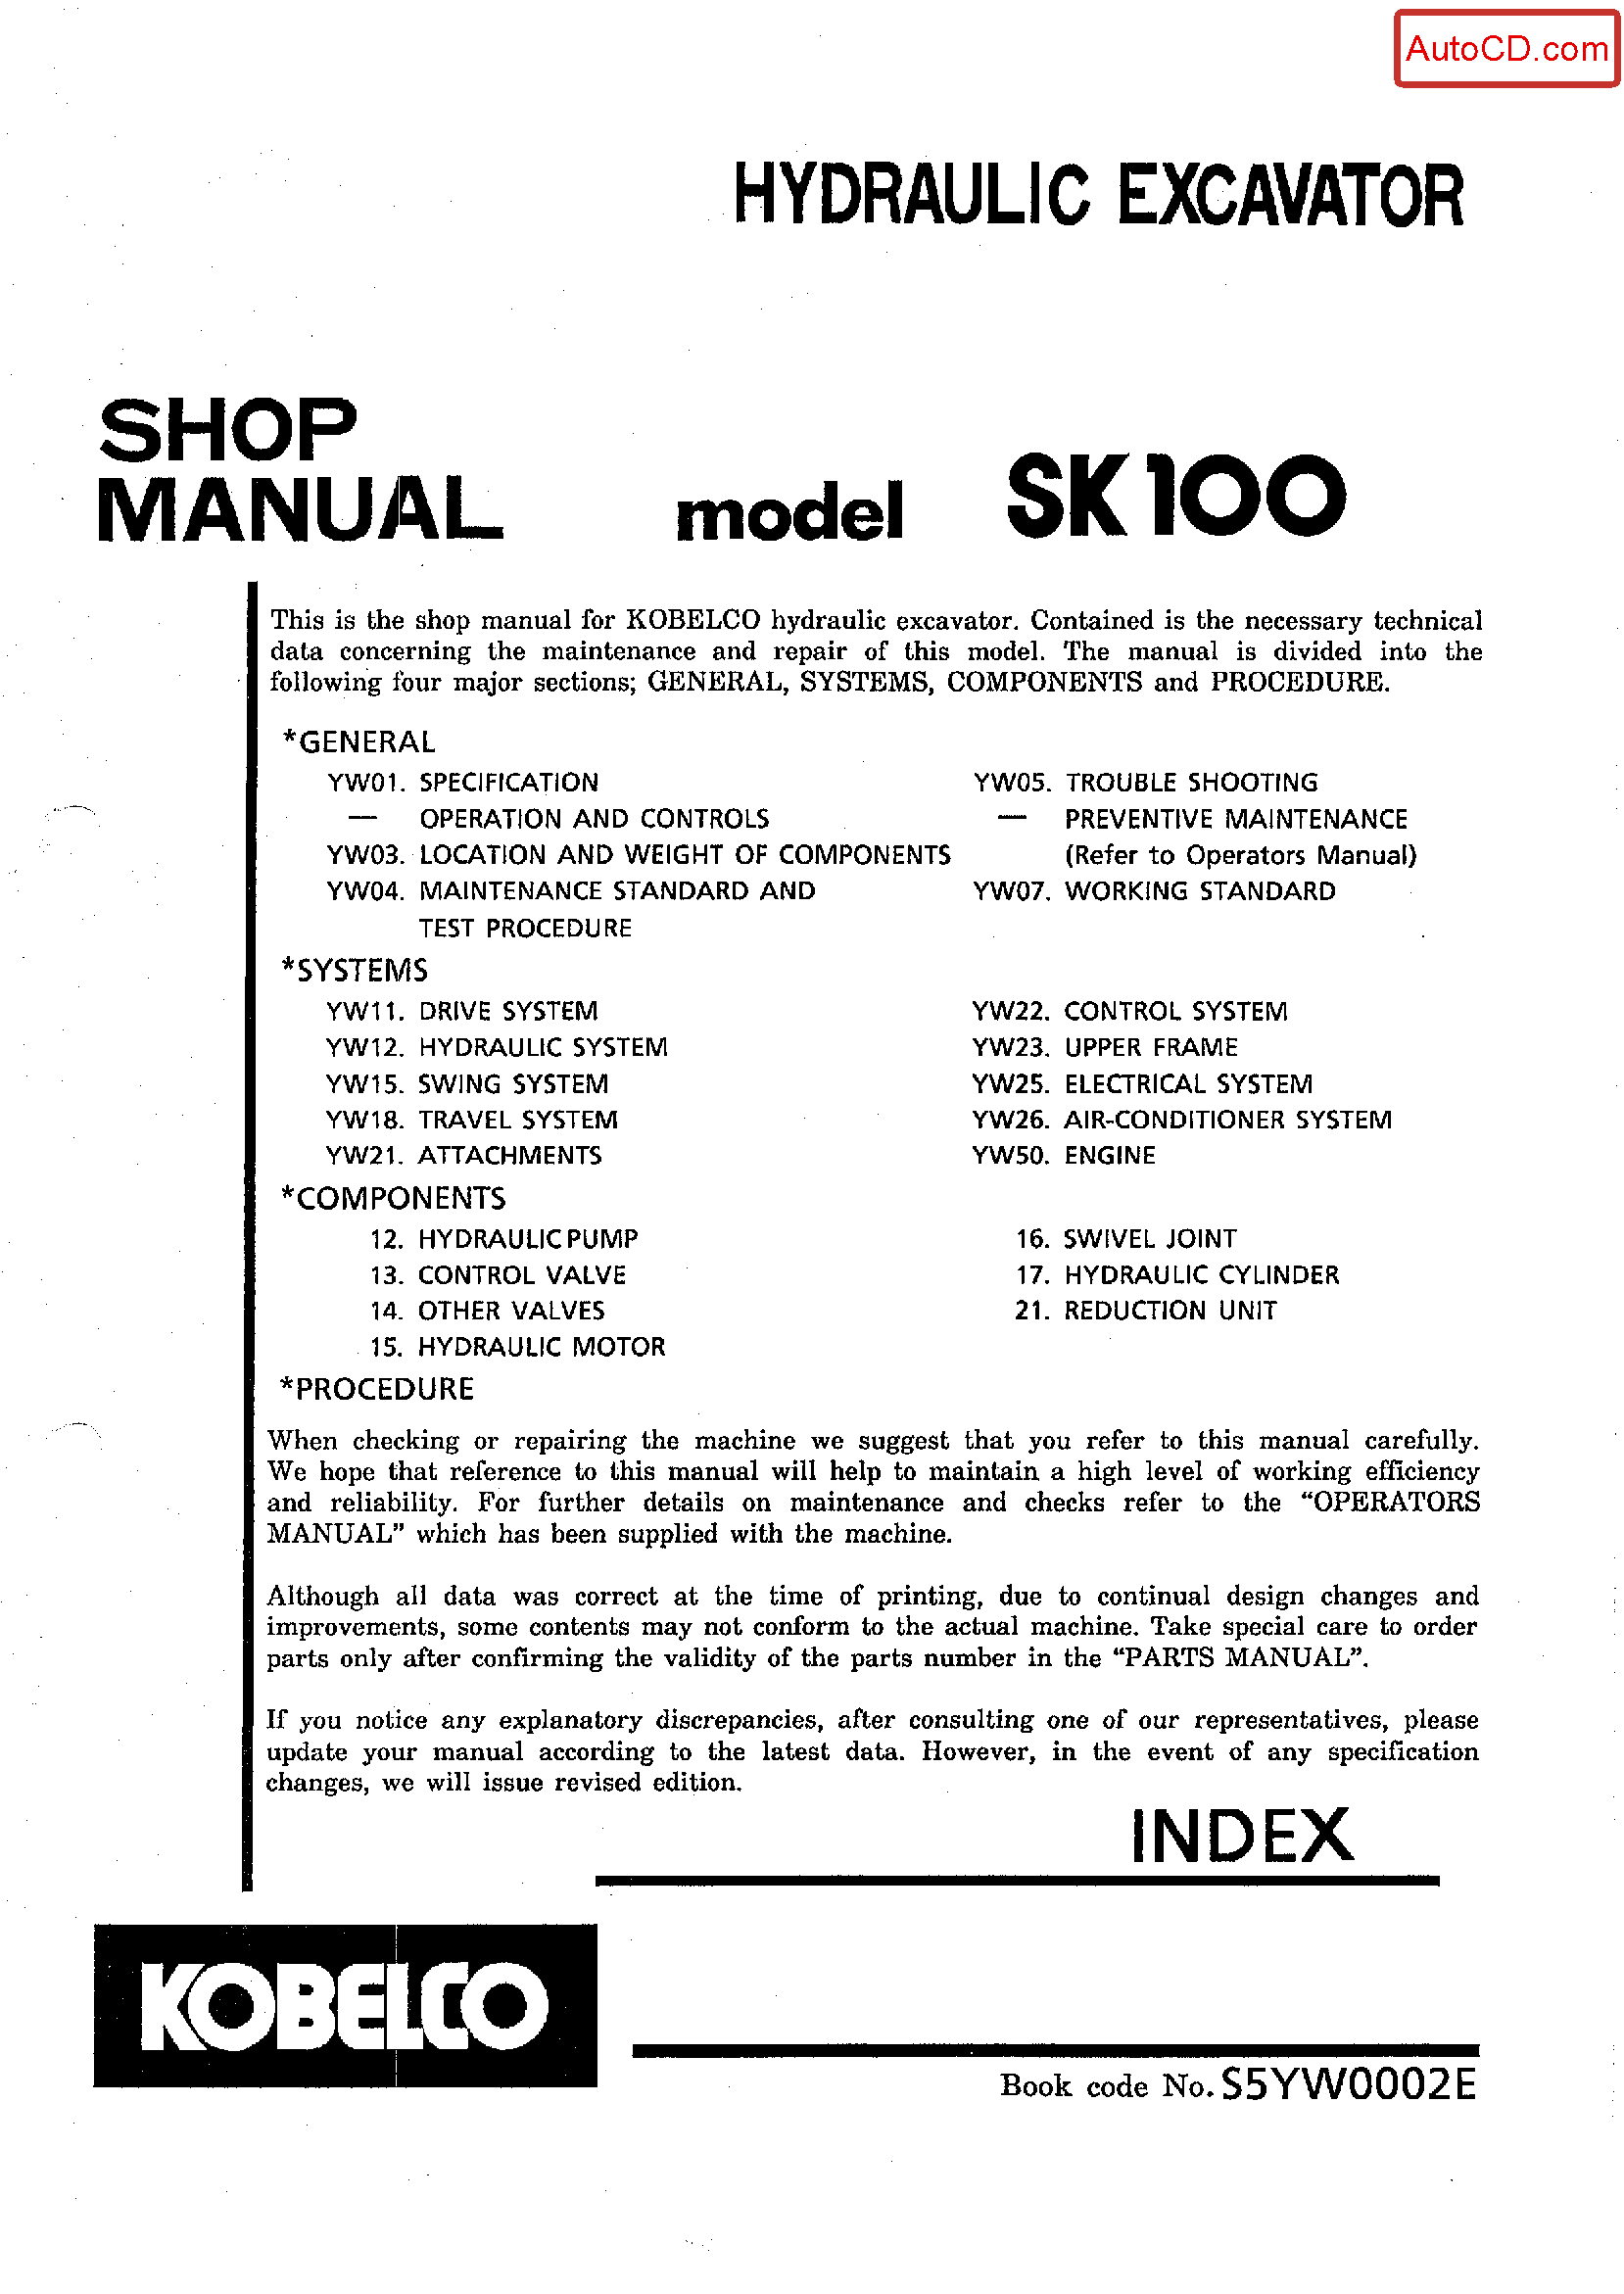 Kobelco SK100 Hydraulic Excavator Service Manual